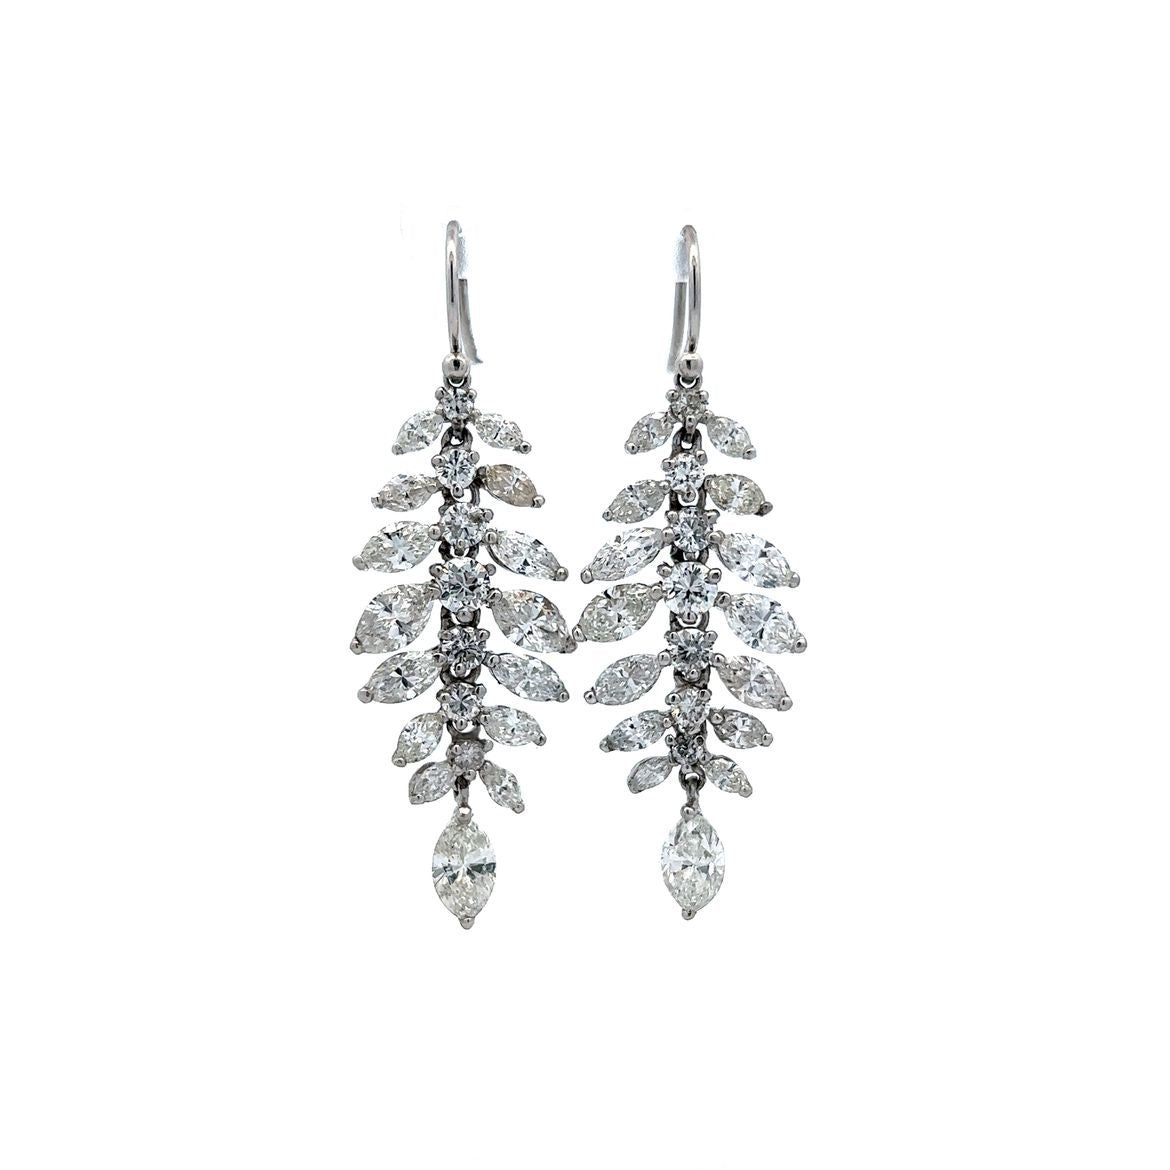 6.60 Carat Diamond Drop Earrings in Platinum